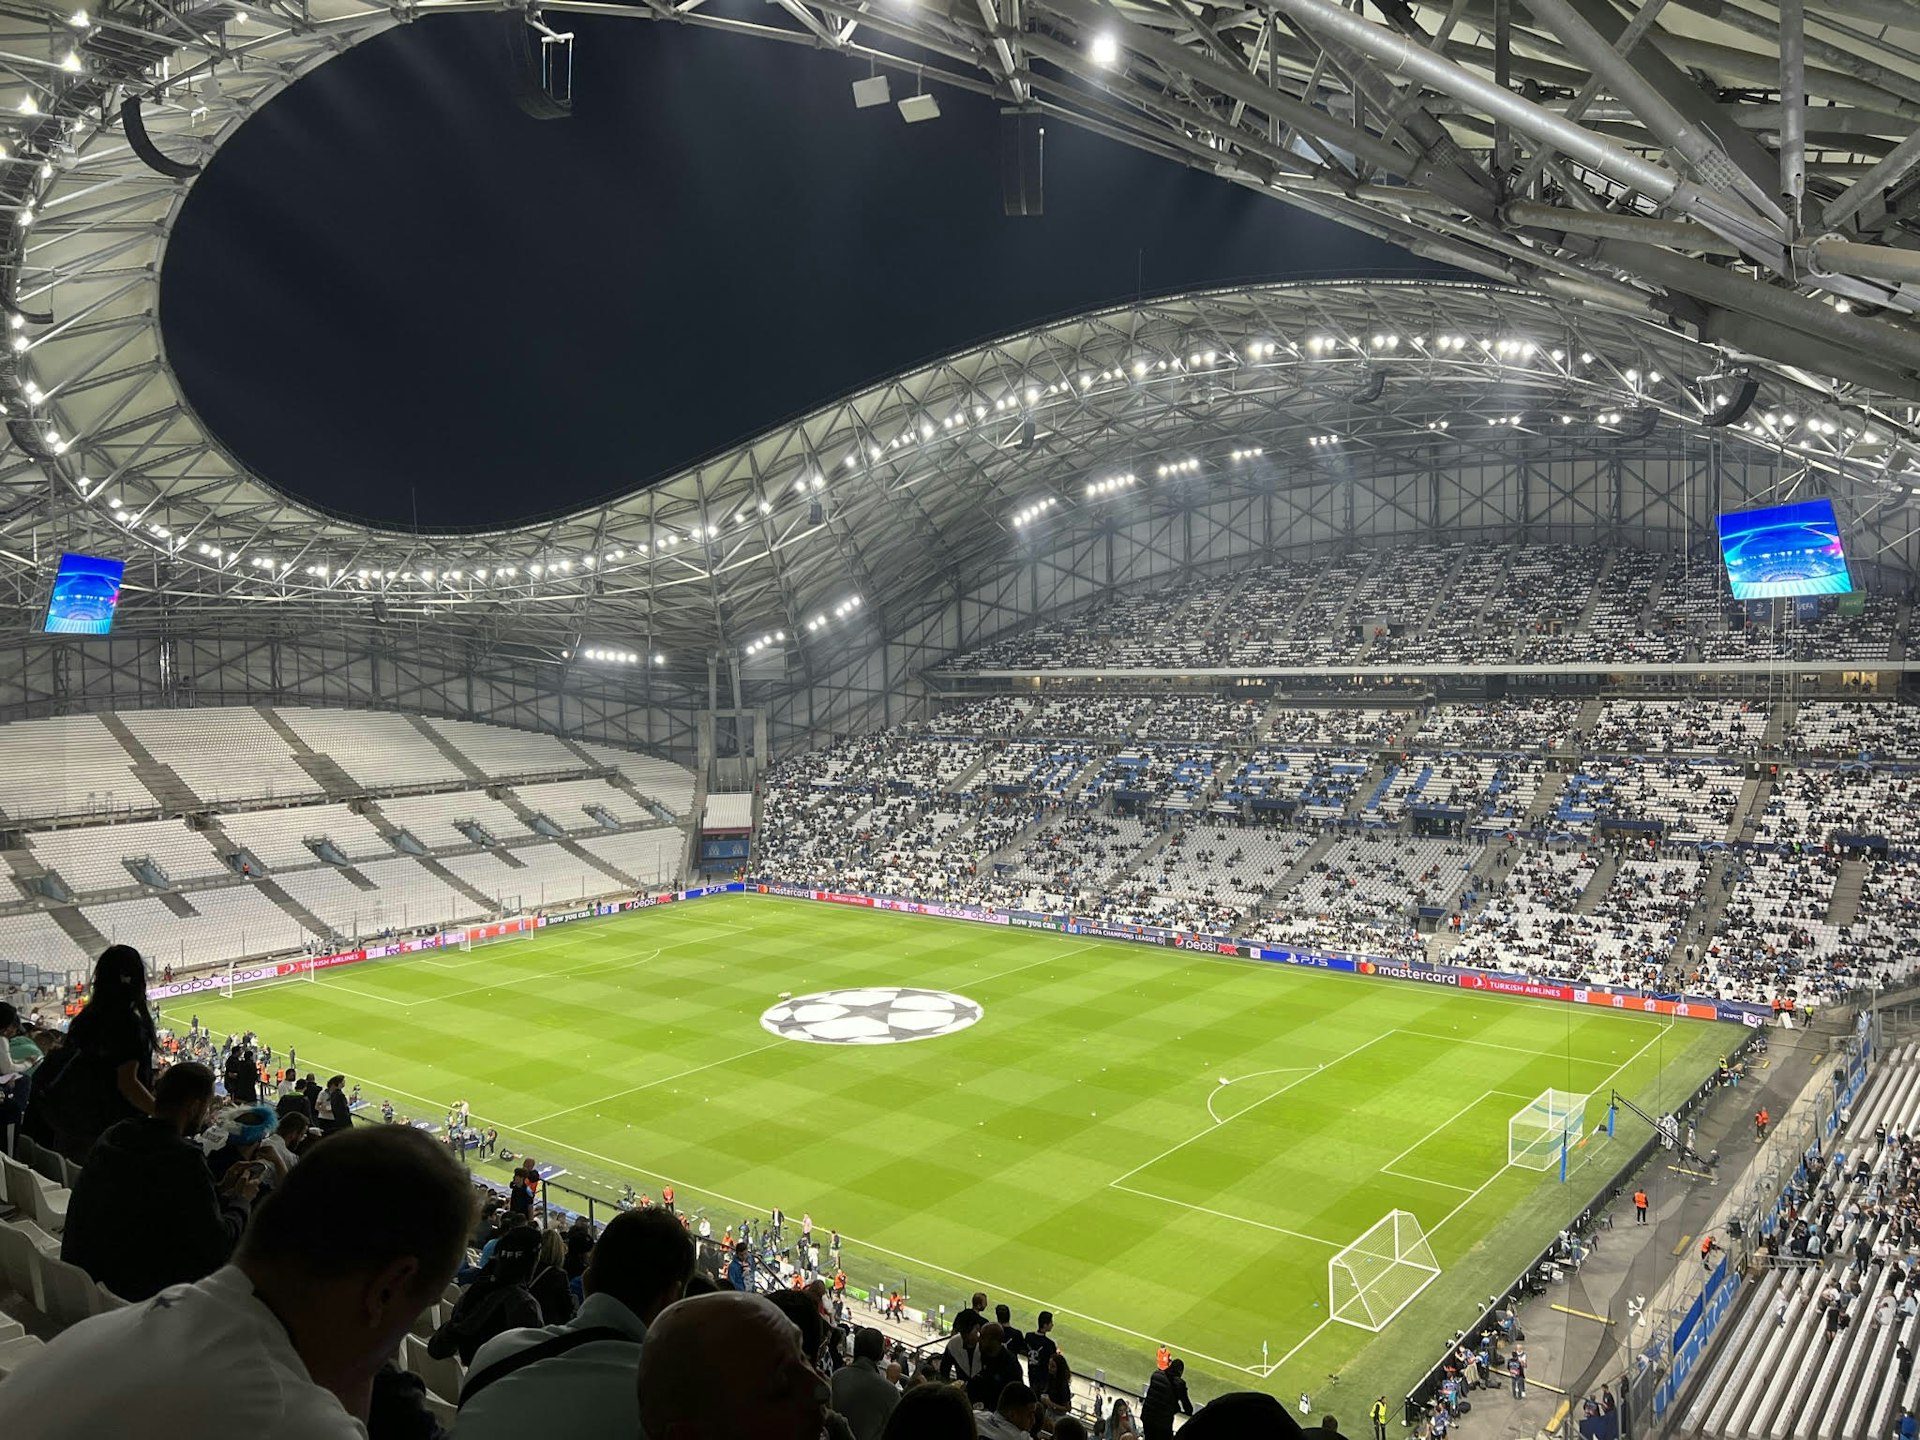 Olympique de Marseille's stadium, the Stade Vélodrome, at night